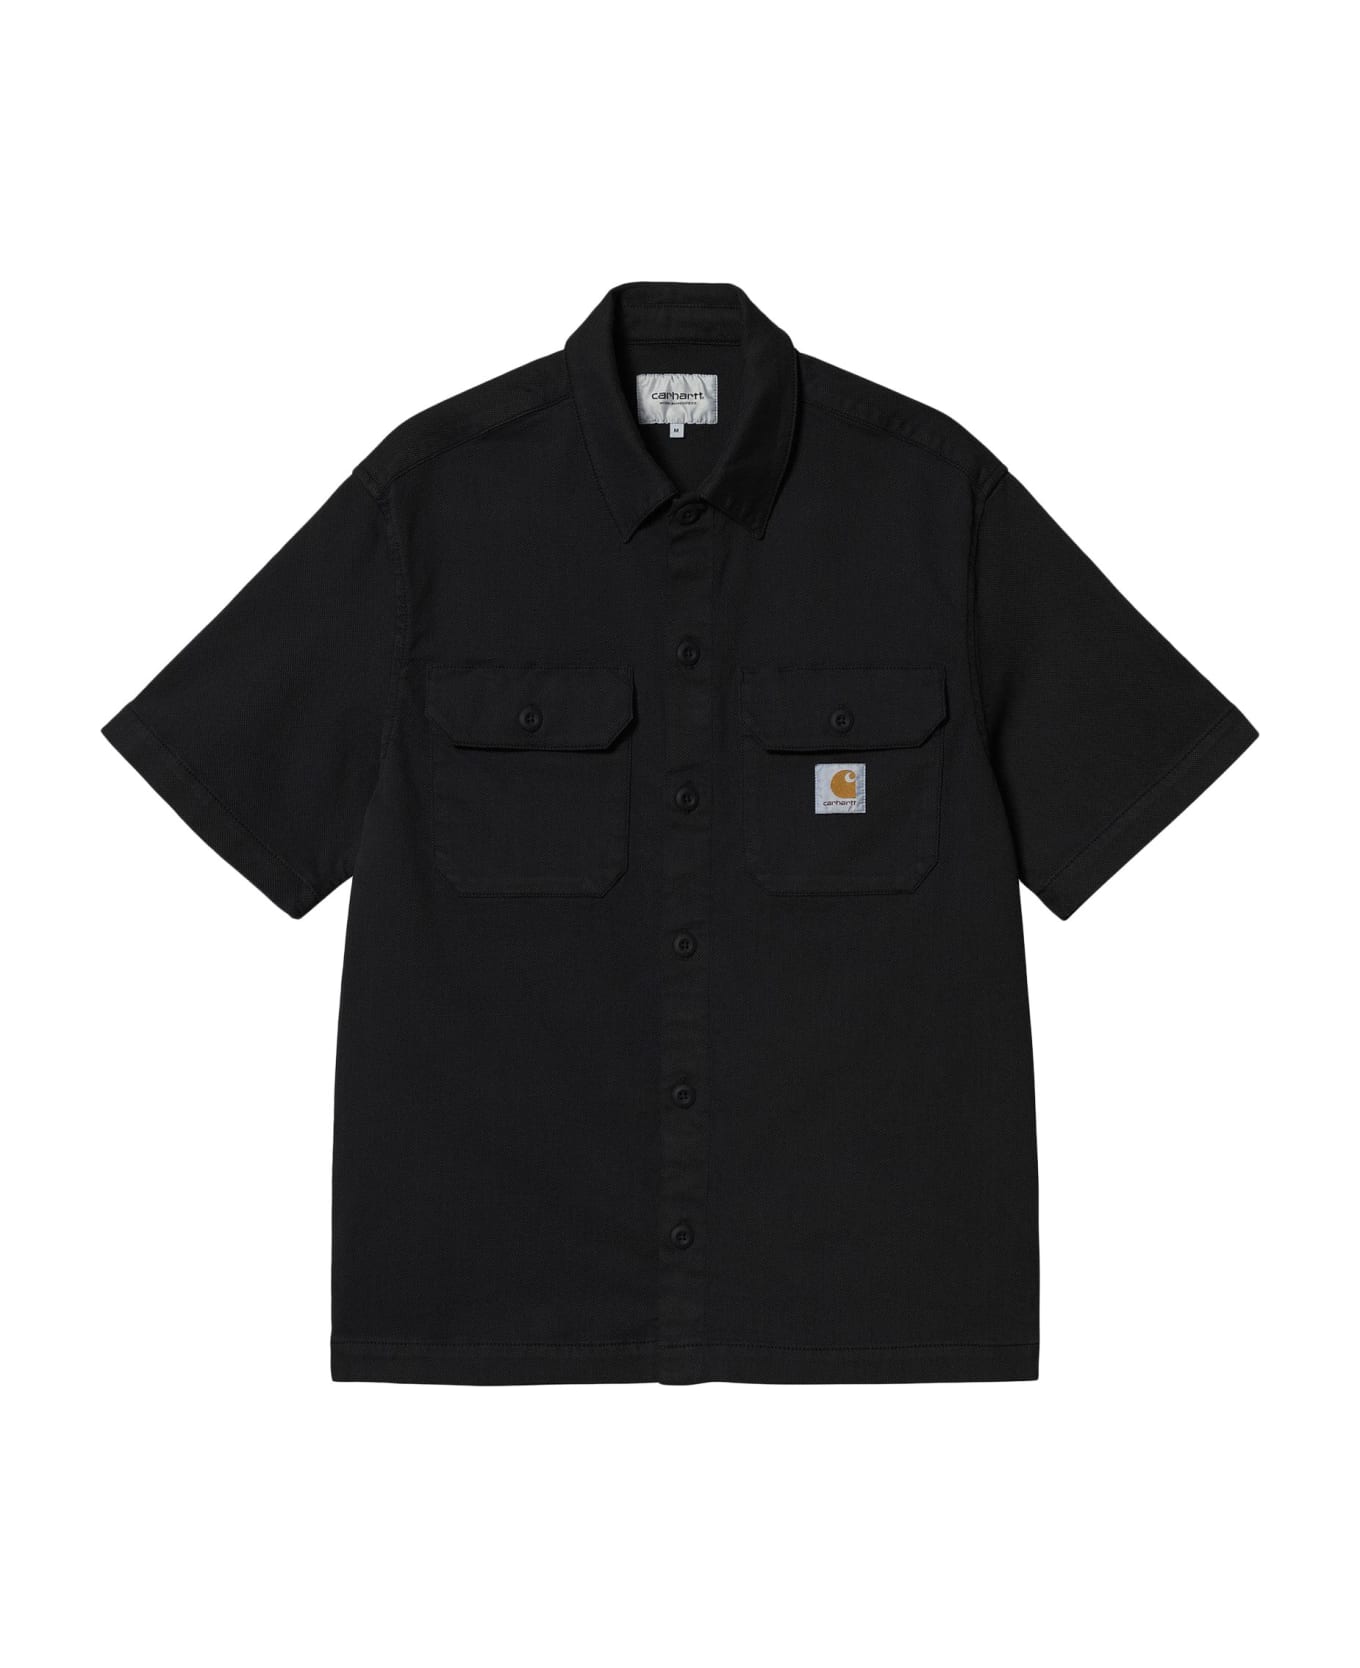 Carhartt Shirts Black - Black シャツ